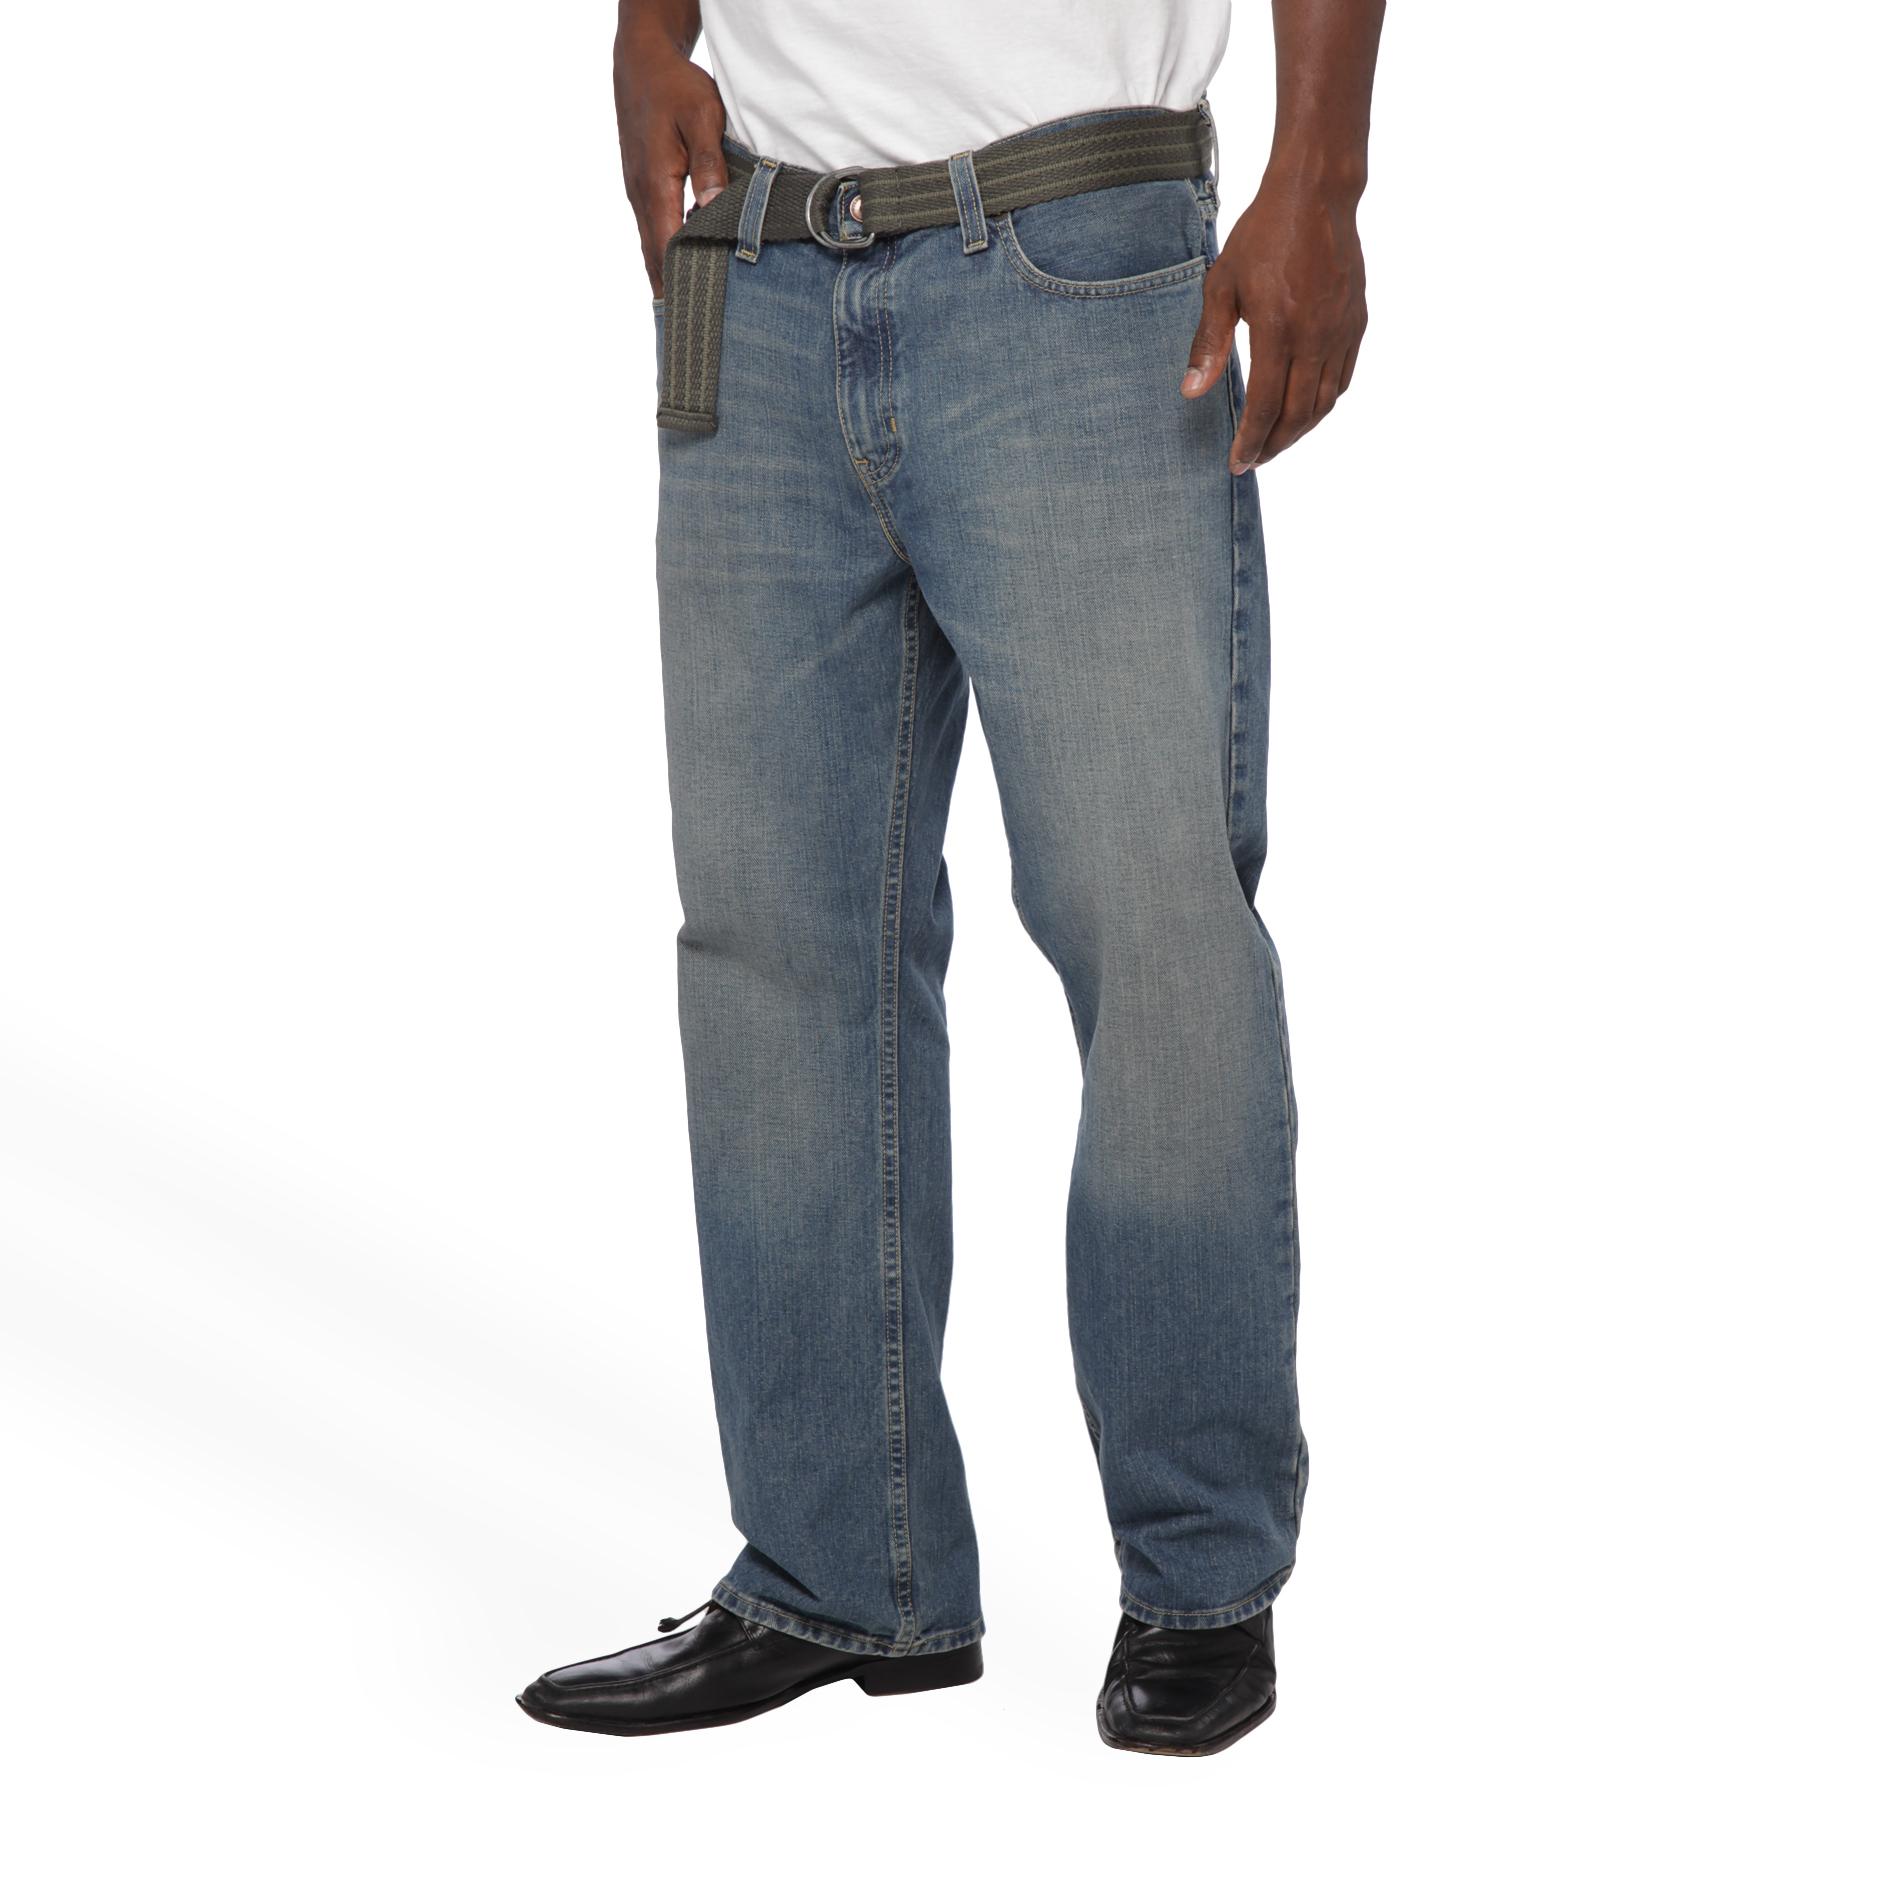 Roebuck & Co. Men's Slim Straight Belted Jeans